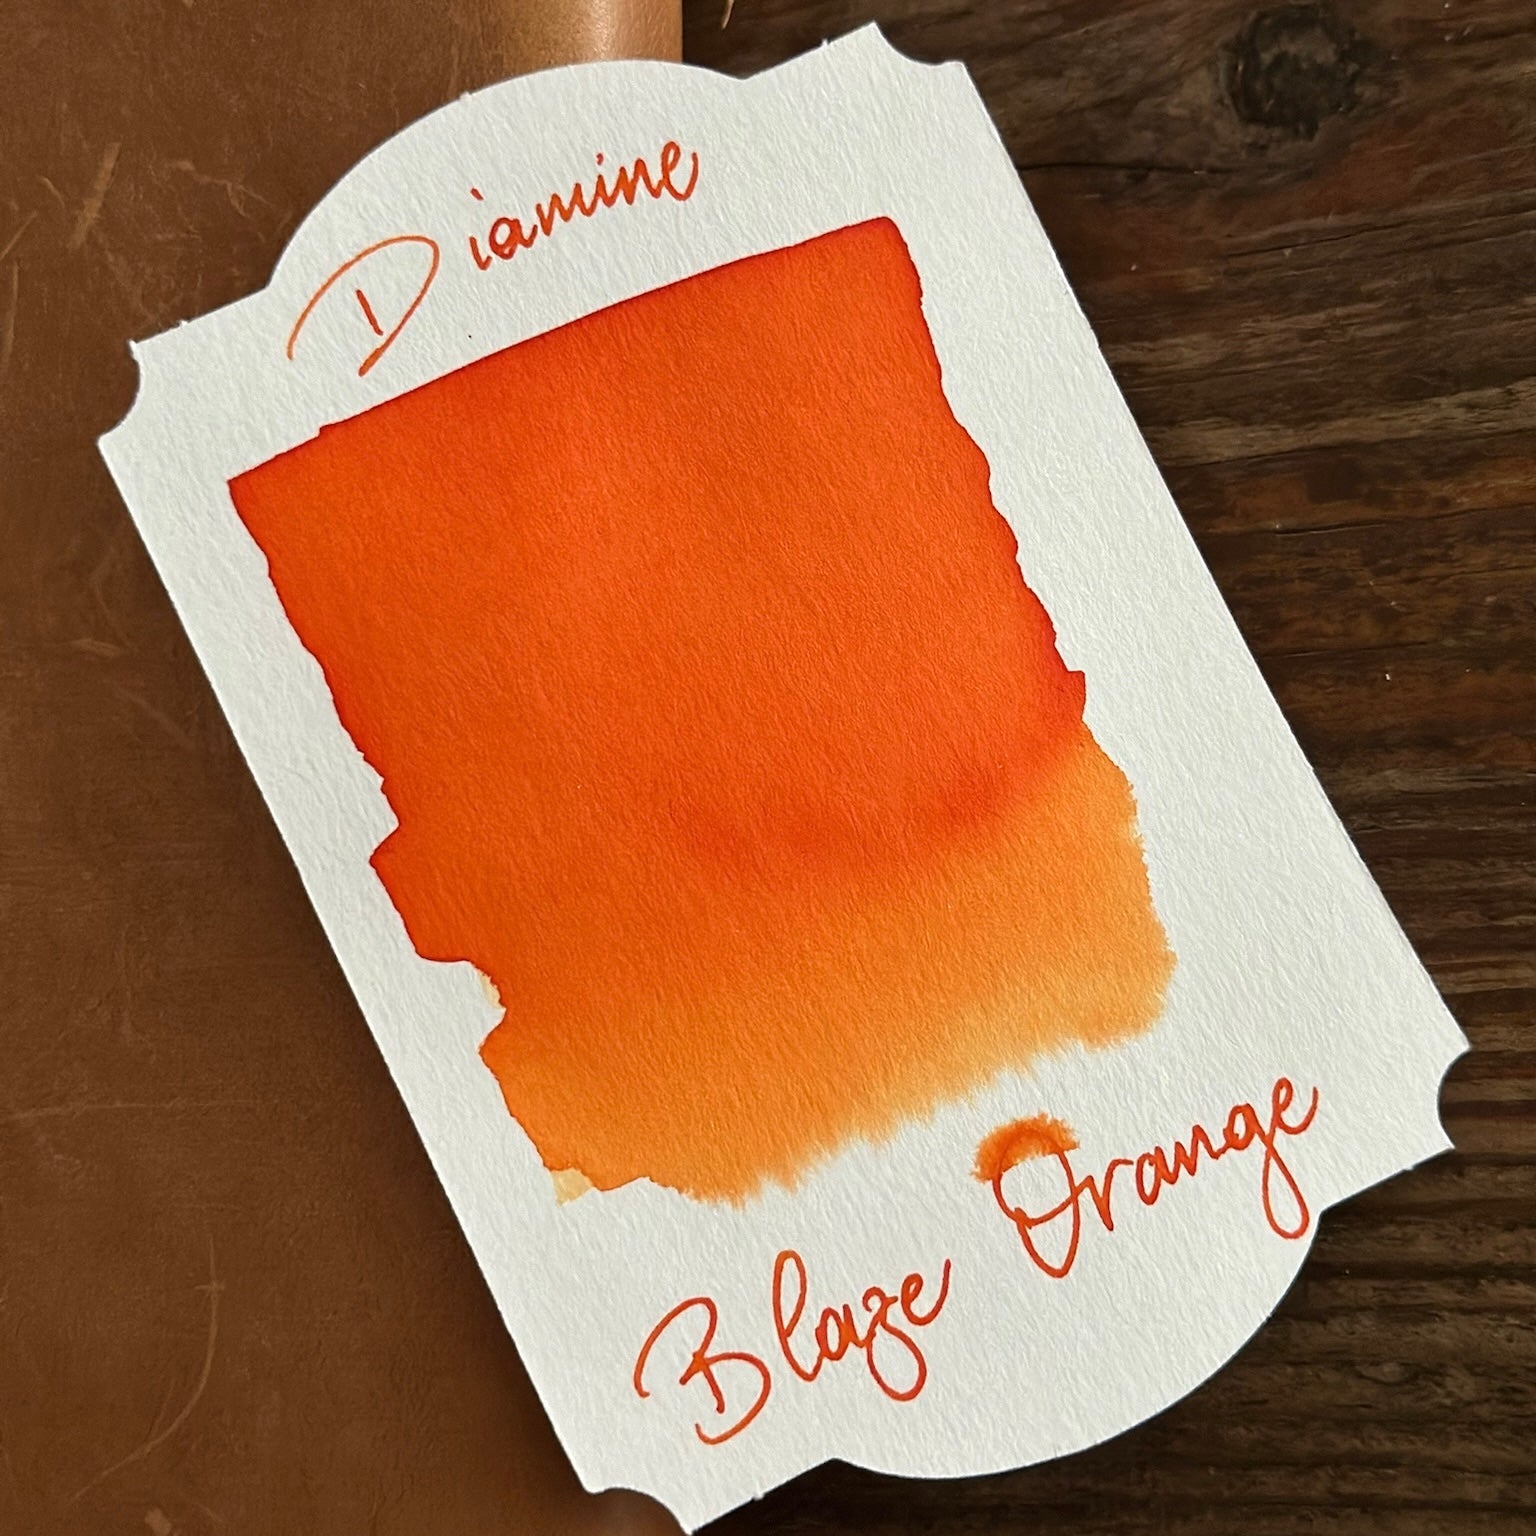 Diamine Blaze Orange